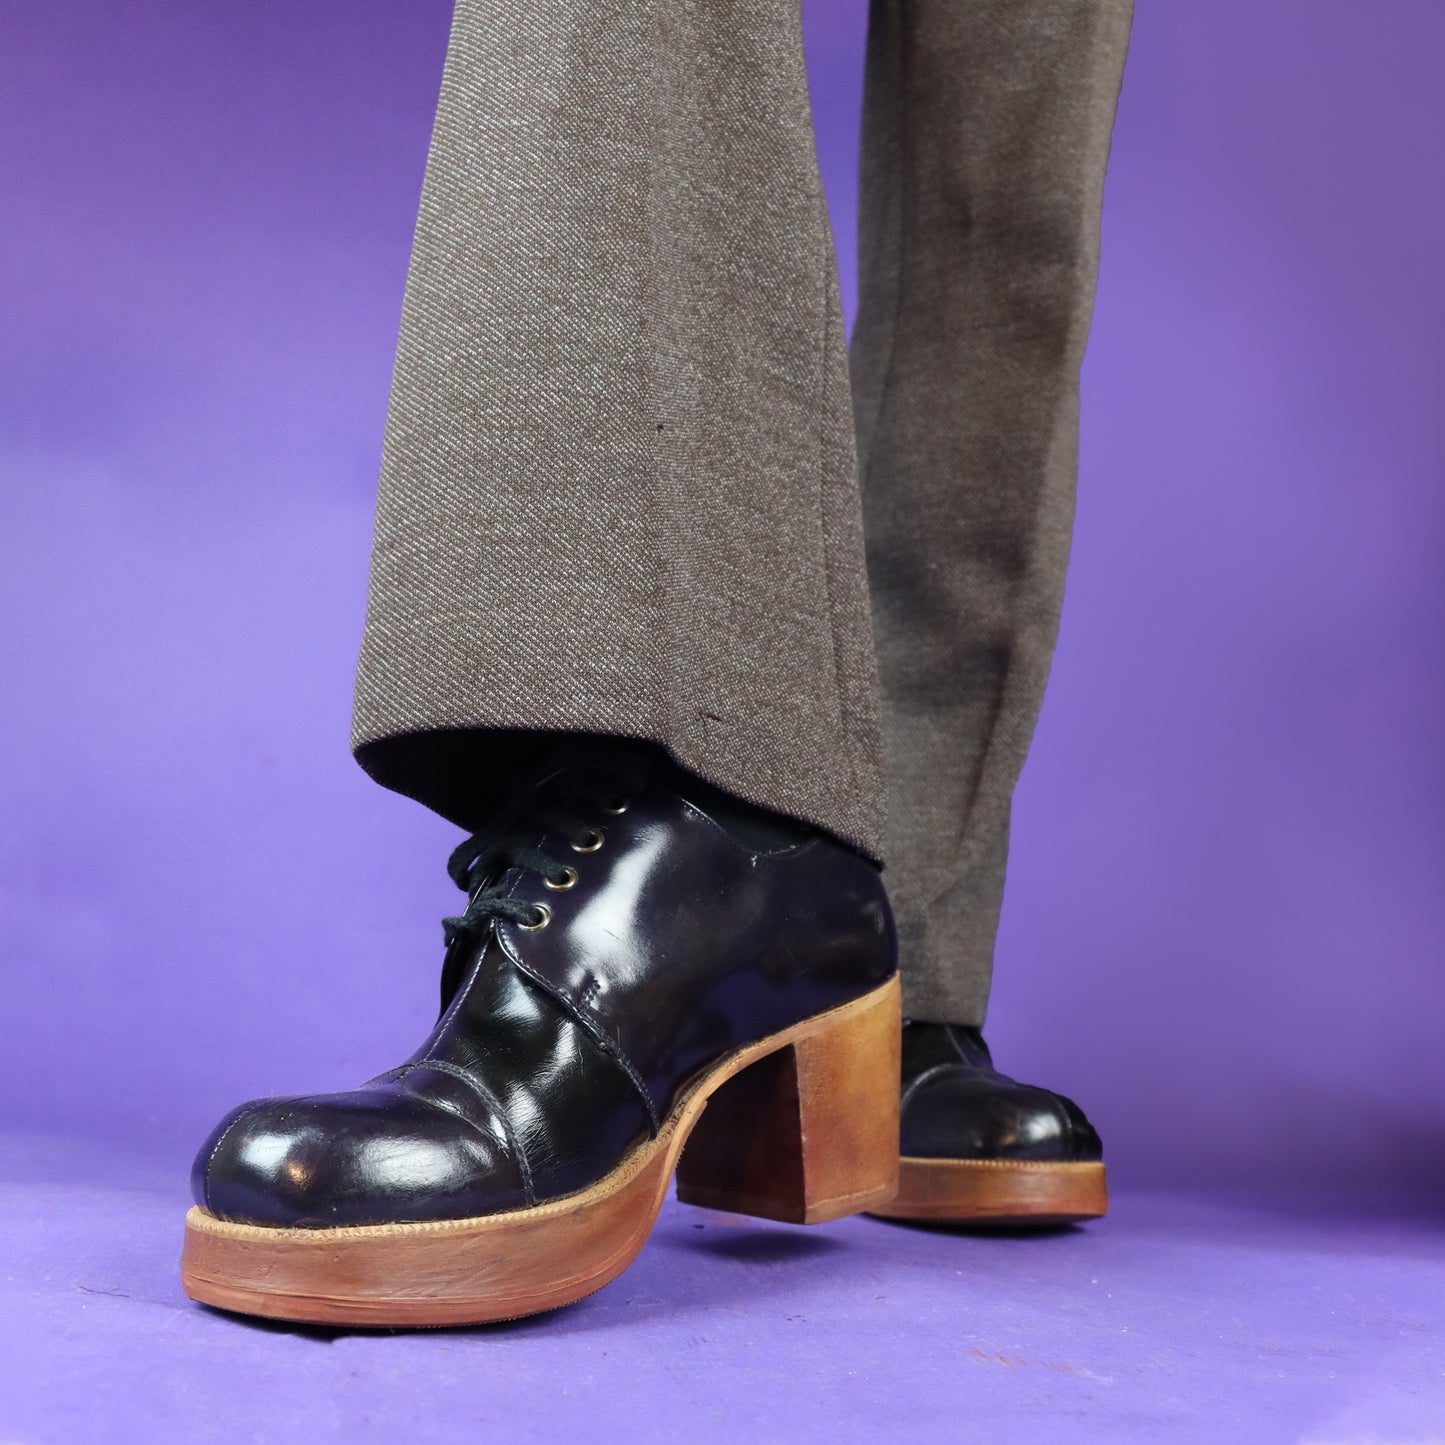 Vintage 1970s Two Tone Purple and Black Patent Leather Platform Shoes